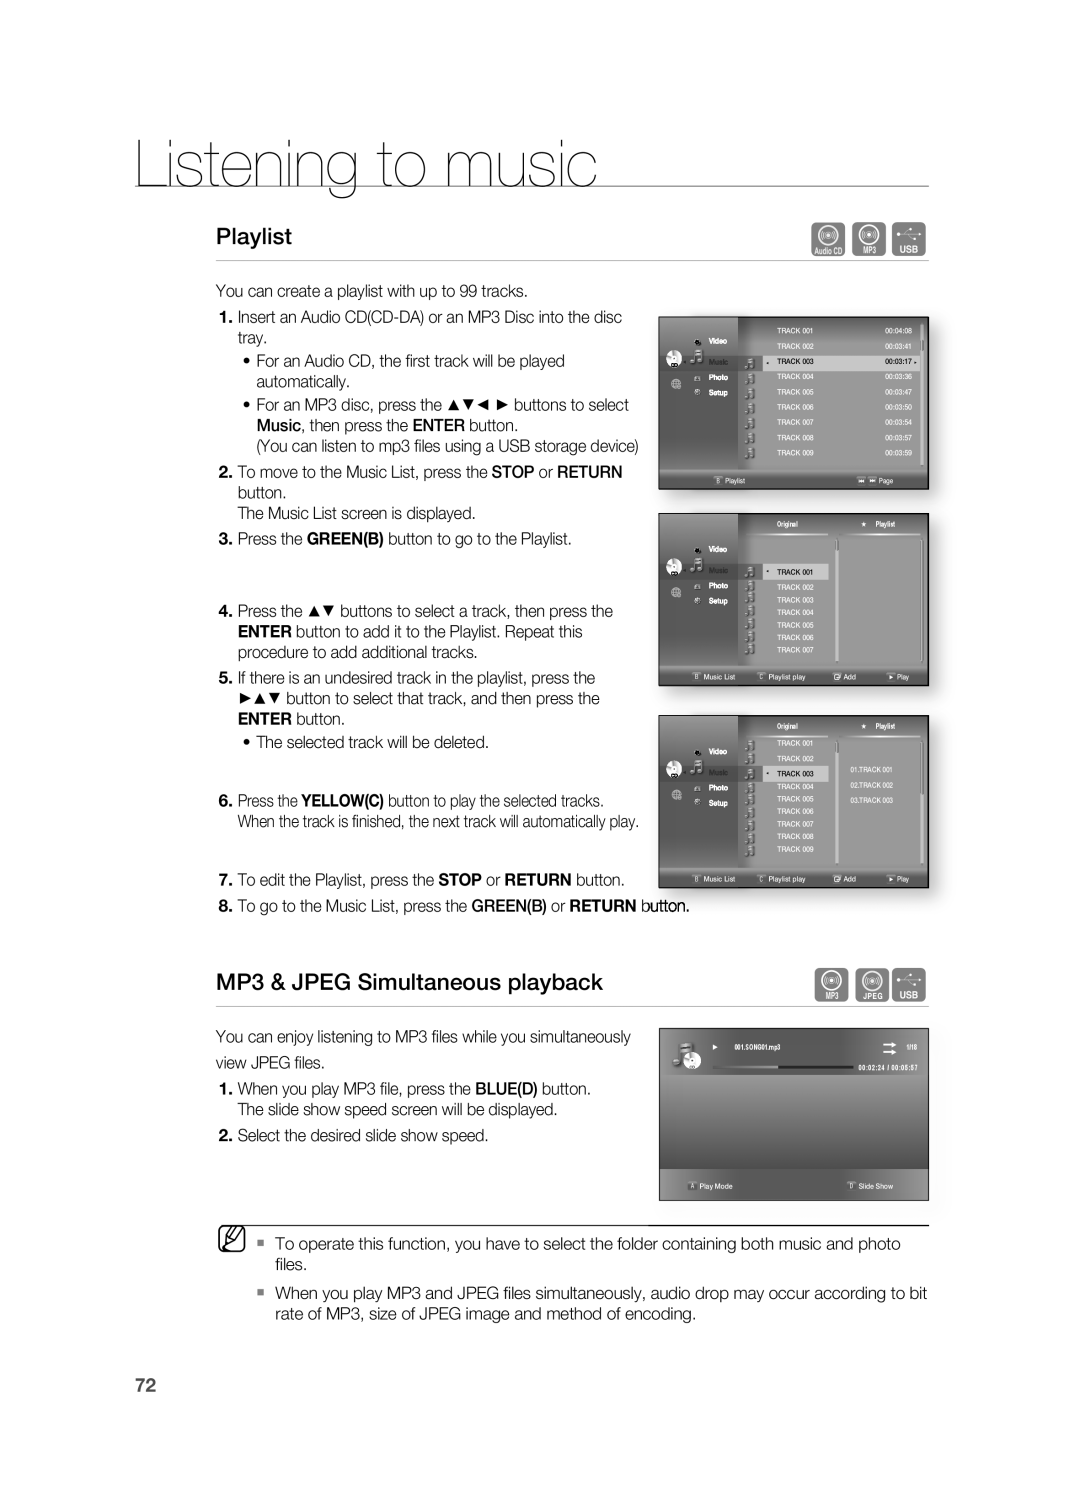 Samsung AH68-02231A Playlist, MP3 & JPEG Simultaneous playbackAF, Listening to music, automatically, ENTER button 